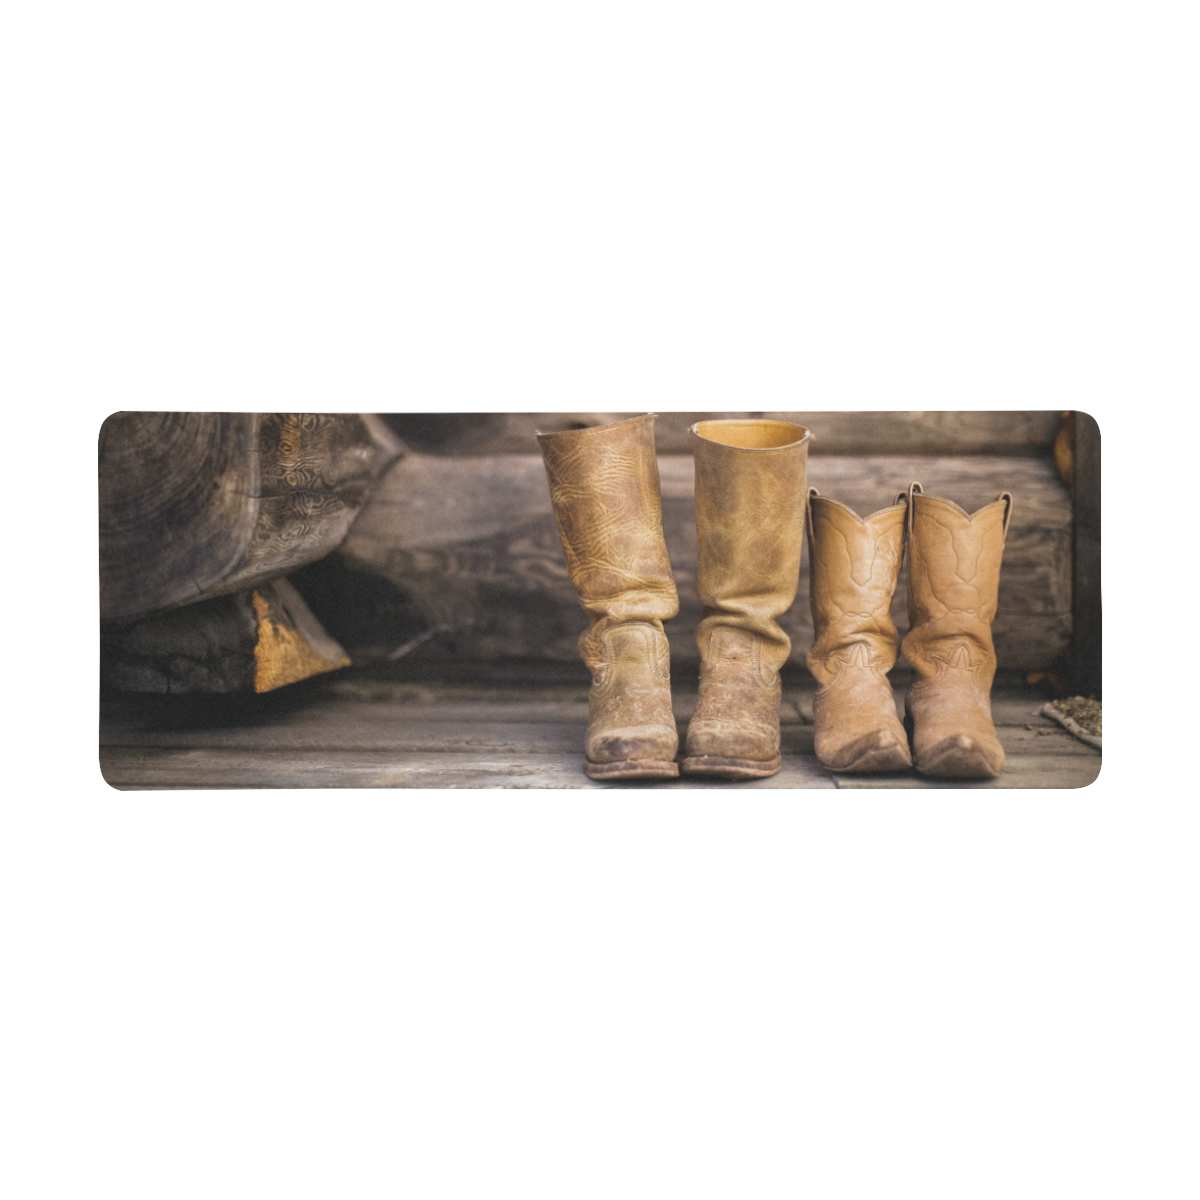 Cowboy Boots Gaming Mousepad (31"x12")